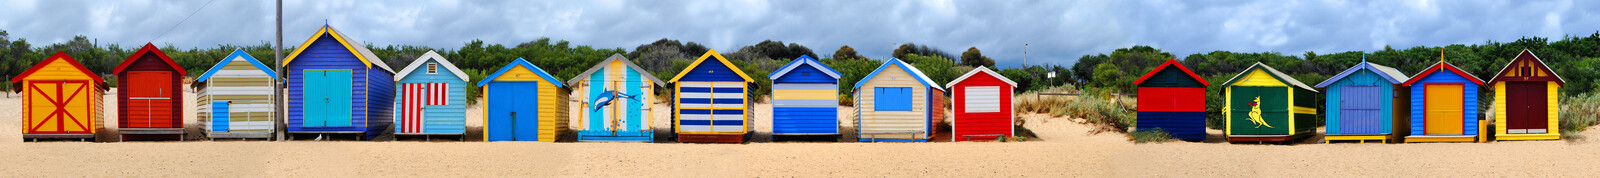 Brighton Beach Huts II - Michael Warrilow